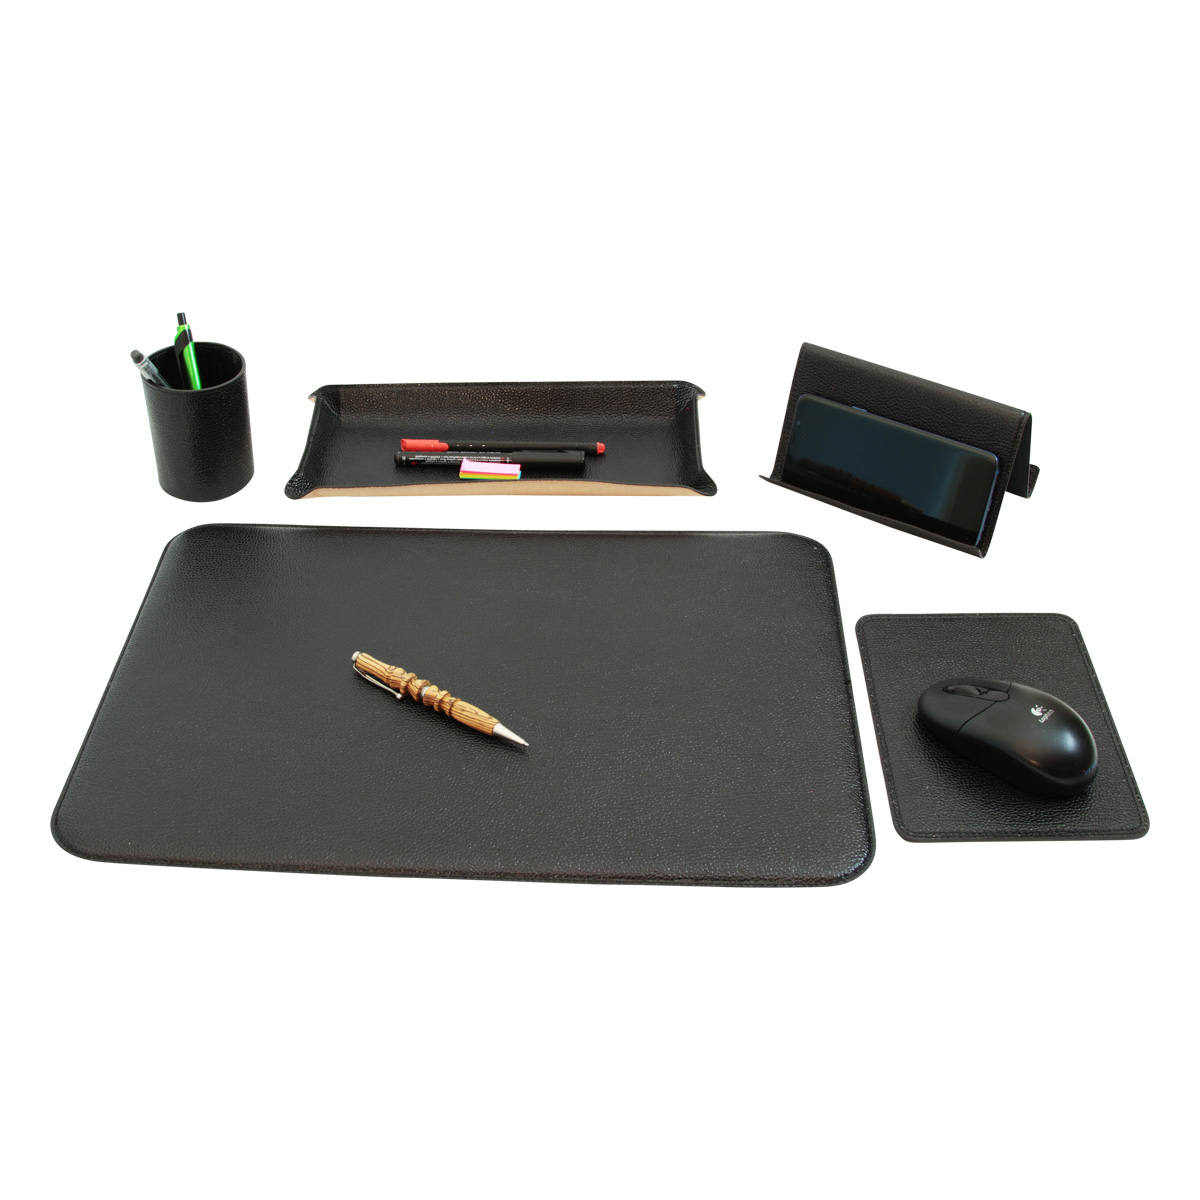 Leather desk kit - 5 pcs black|769051NE|Old Angler Firenze